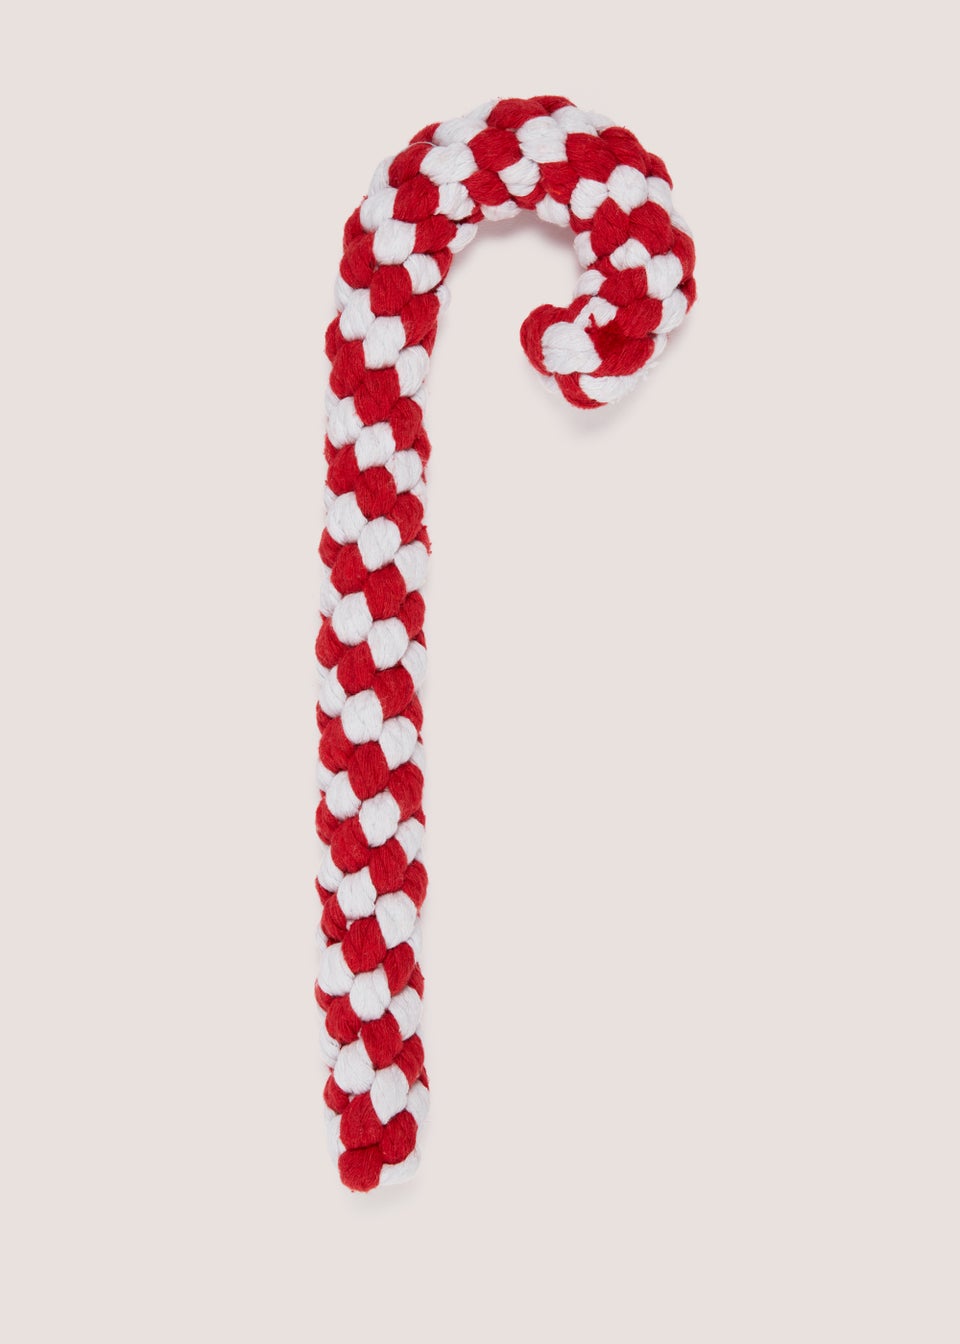 Candy Cane Christmas Pet Toy (30cm x 8cm x 4cm)